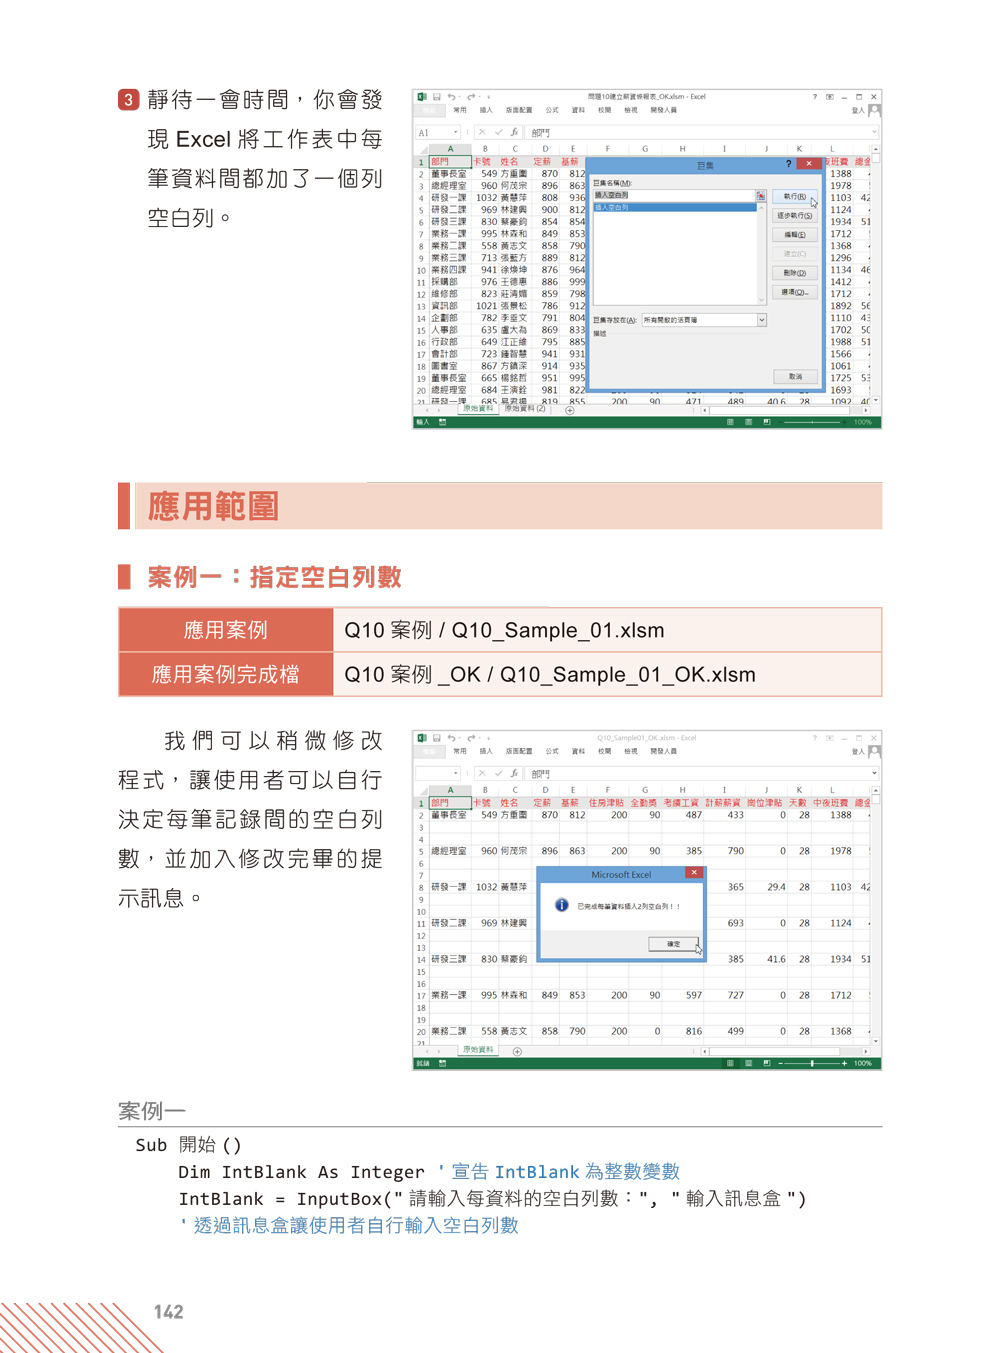 ►GO►最新優惠► 【書籍】不懂程式也能直接應用的Excel 2013 VBA巨集活用200例 (附CDx1)